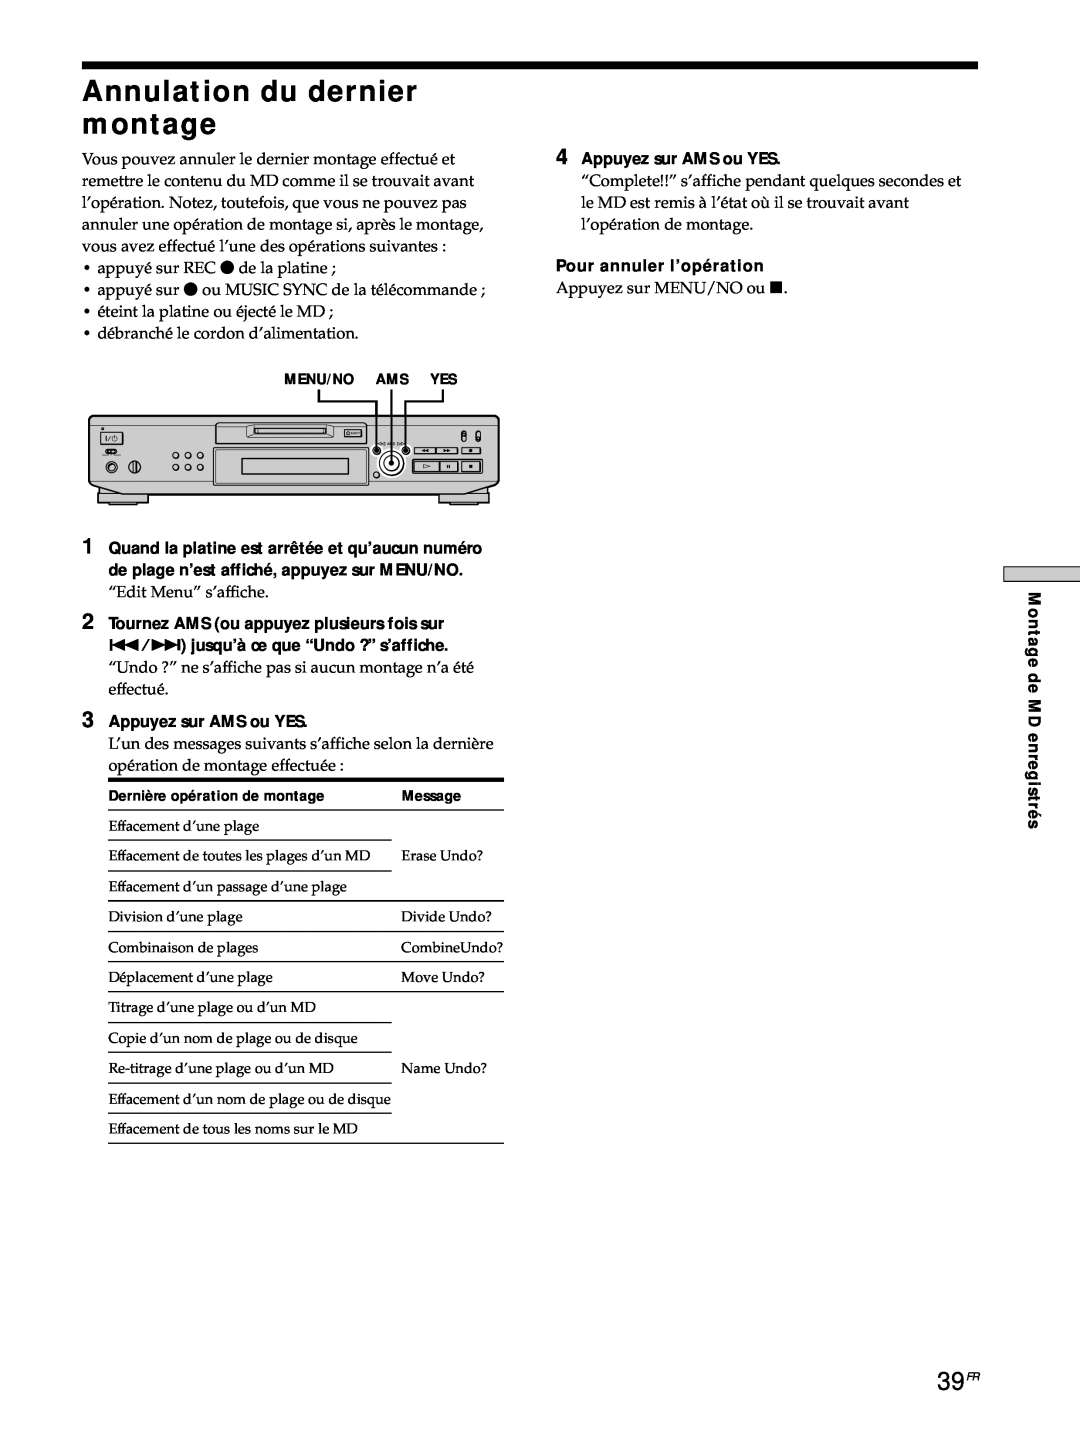 Sony MDS-JE530 manual Annulation du dernier montage, 39FR 